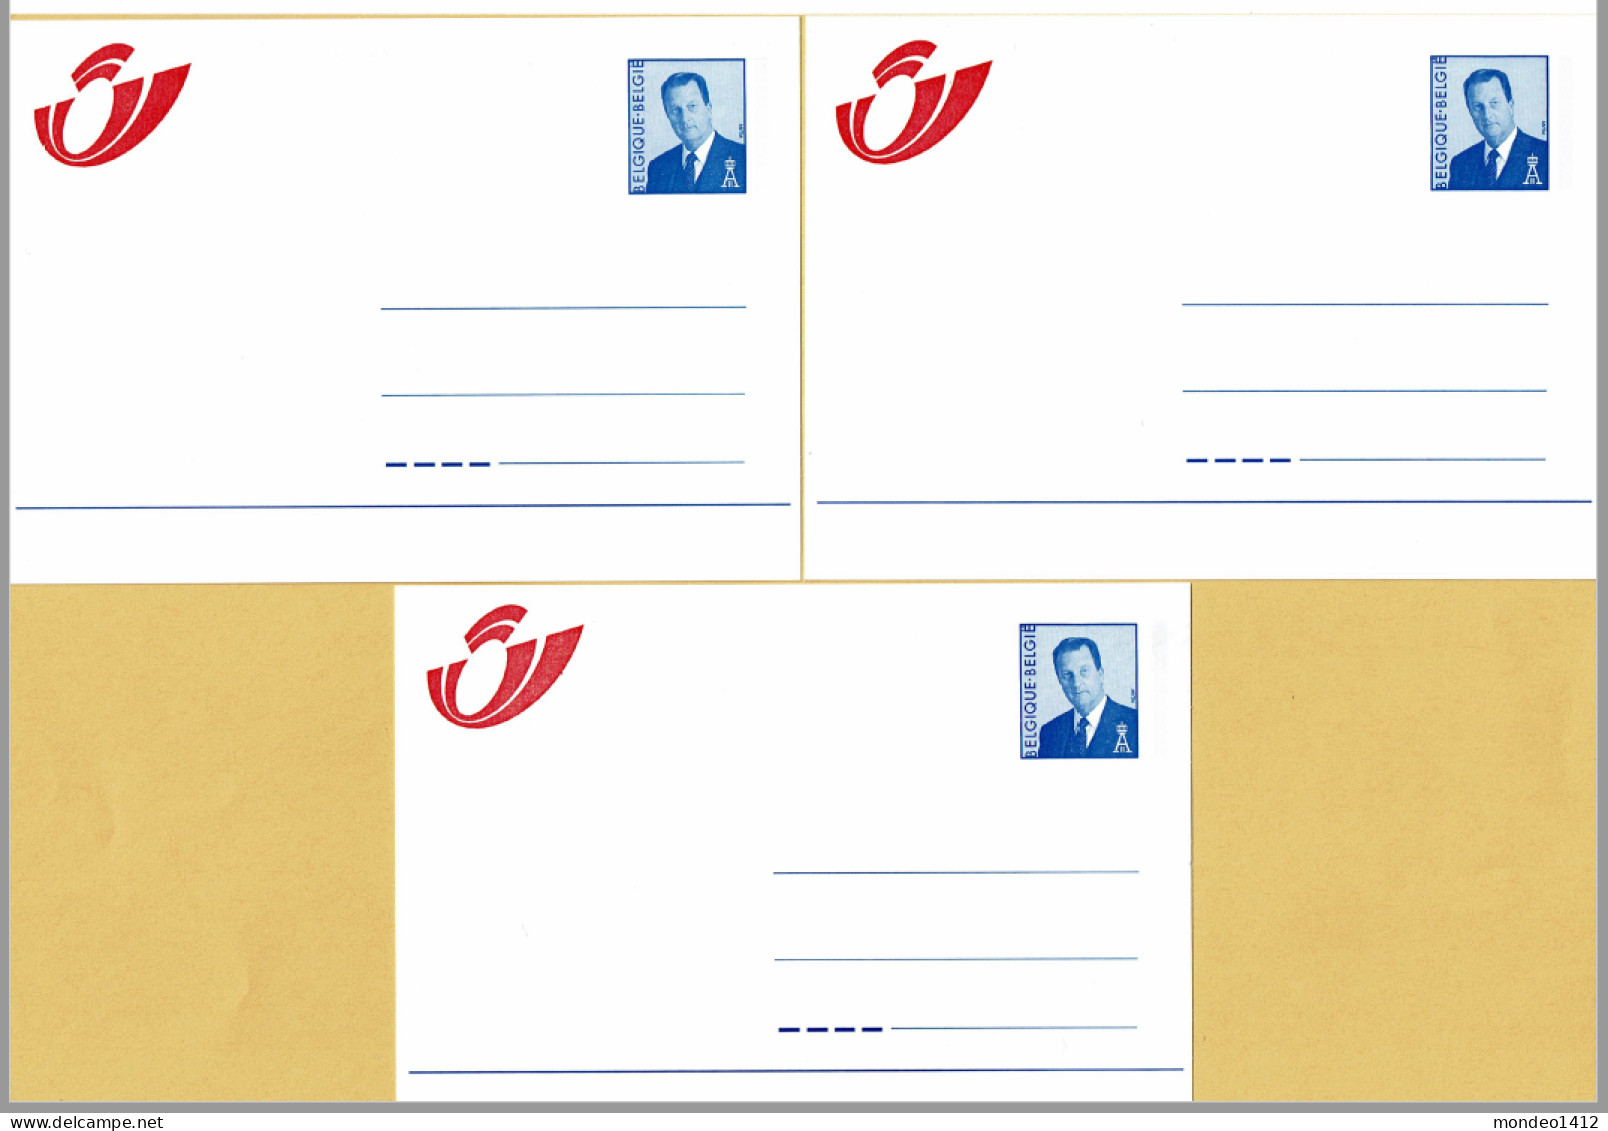 1998 - Briefkaarten - Mutapost Nieuw Postlogo - Adresverandering - Compleet N-F-D - Aviso Cambio De Direccion